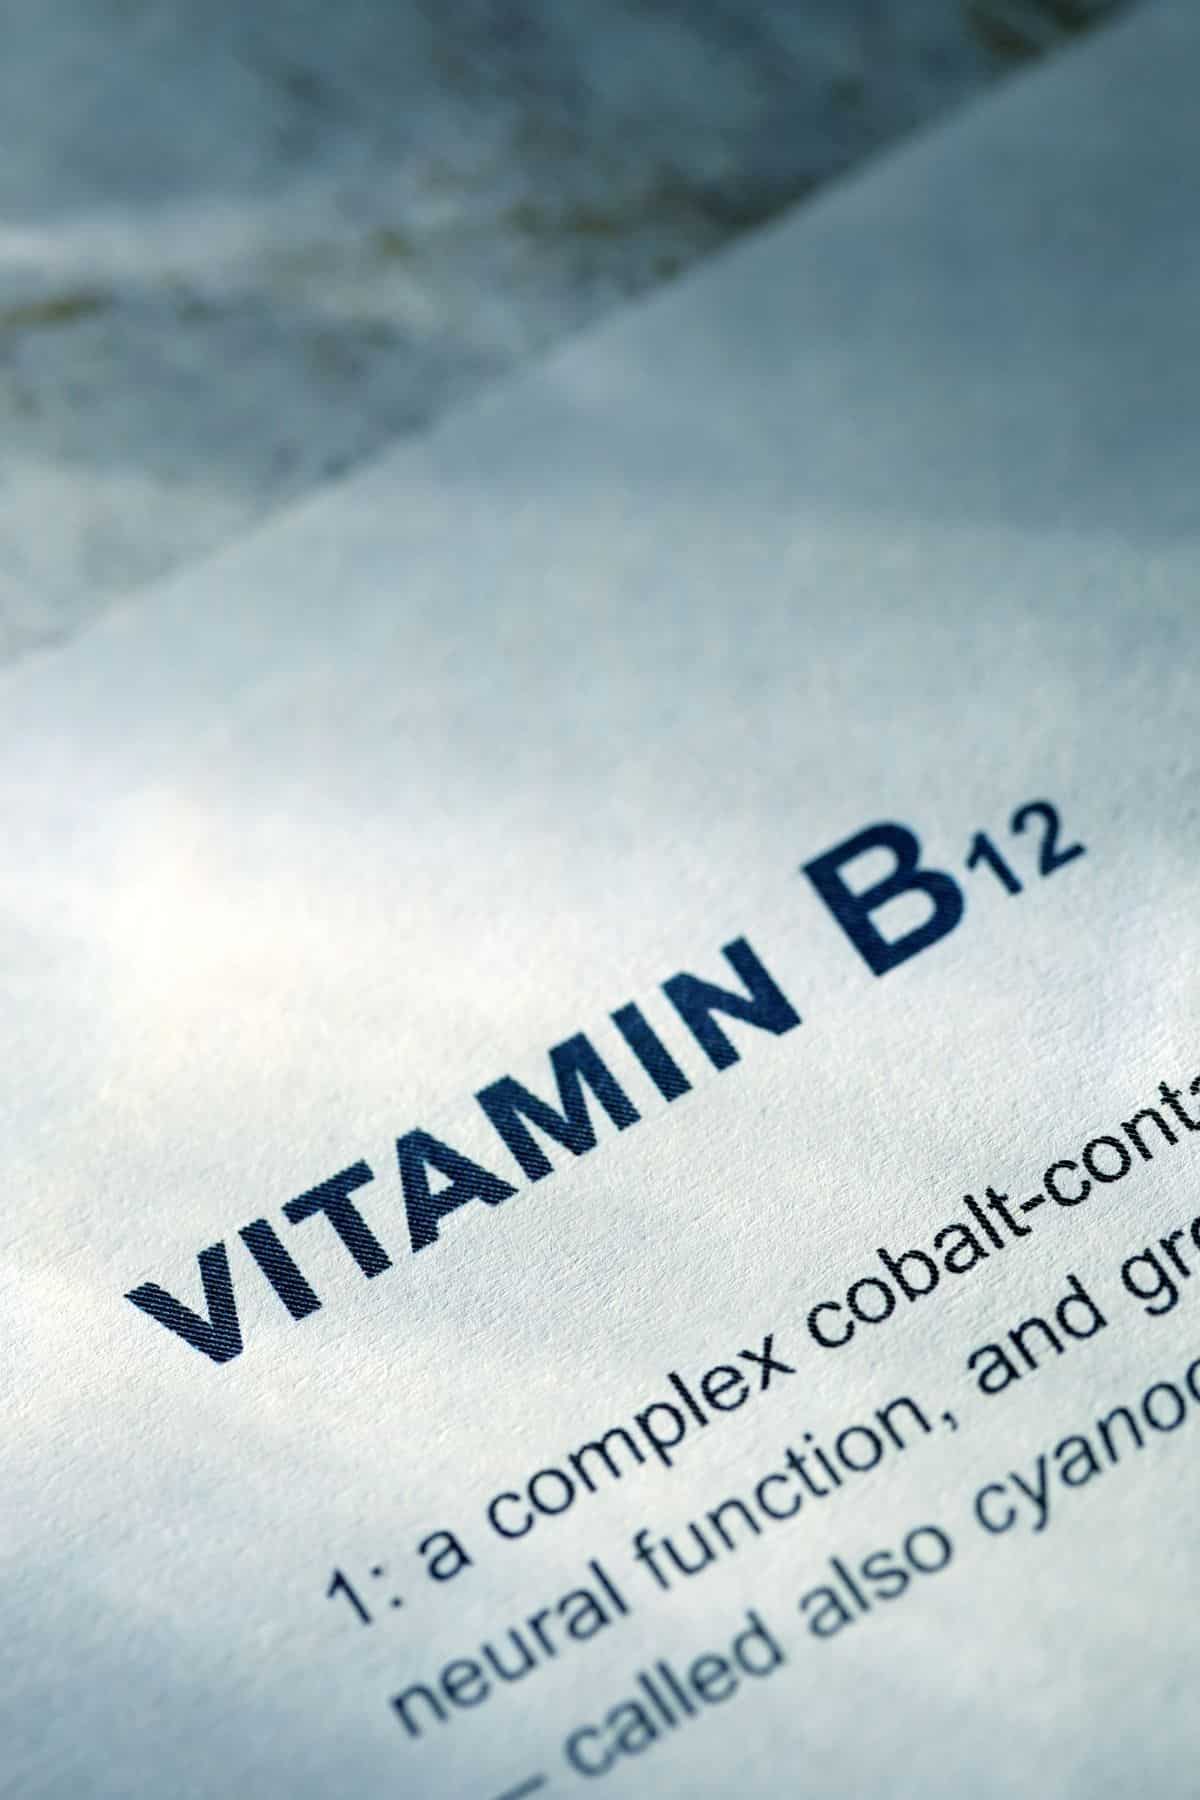 Un papel con vitamina B12 escrito en él.